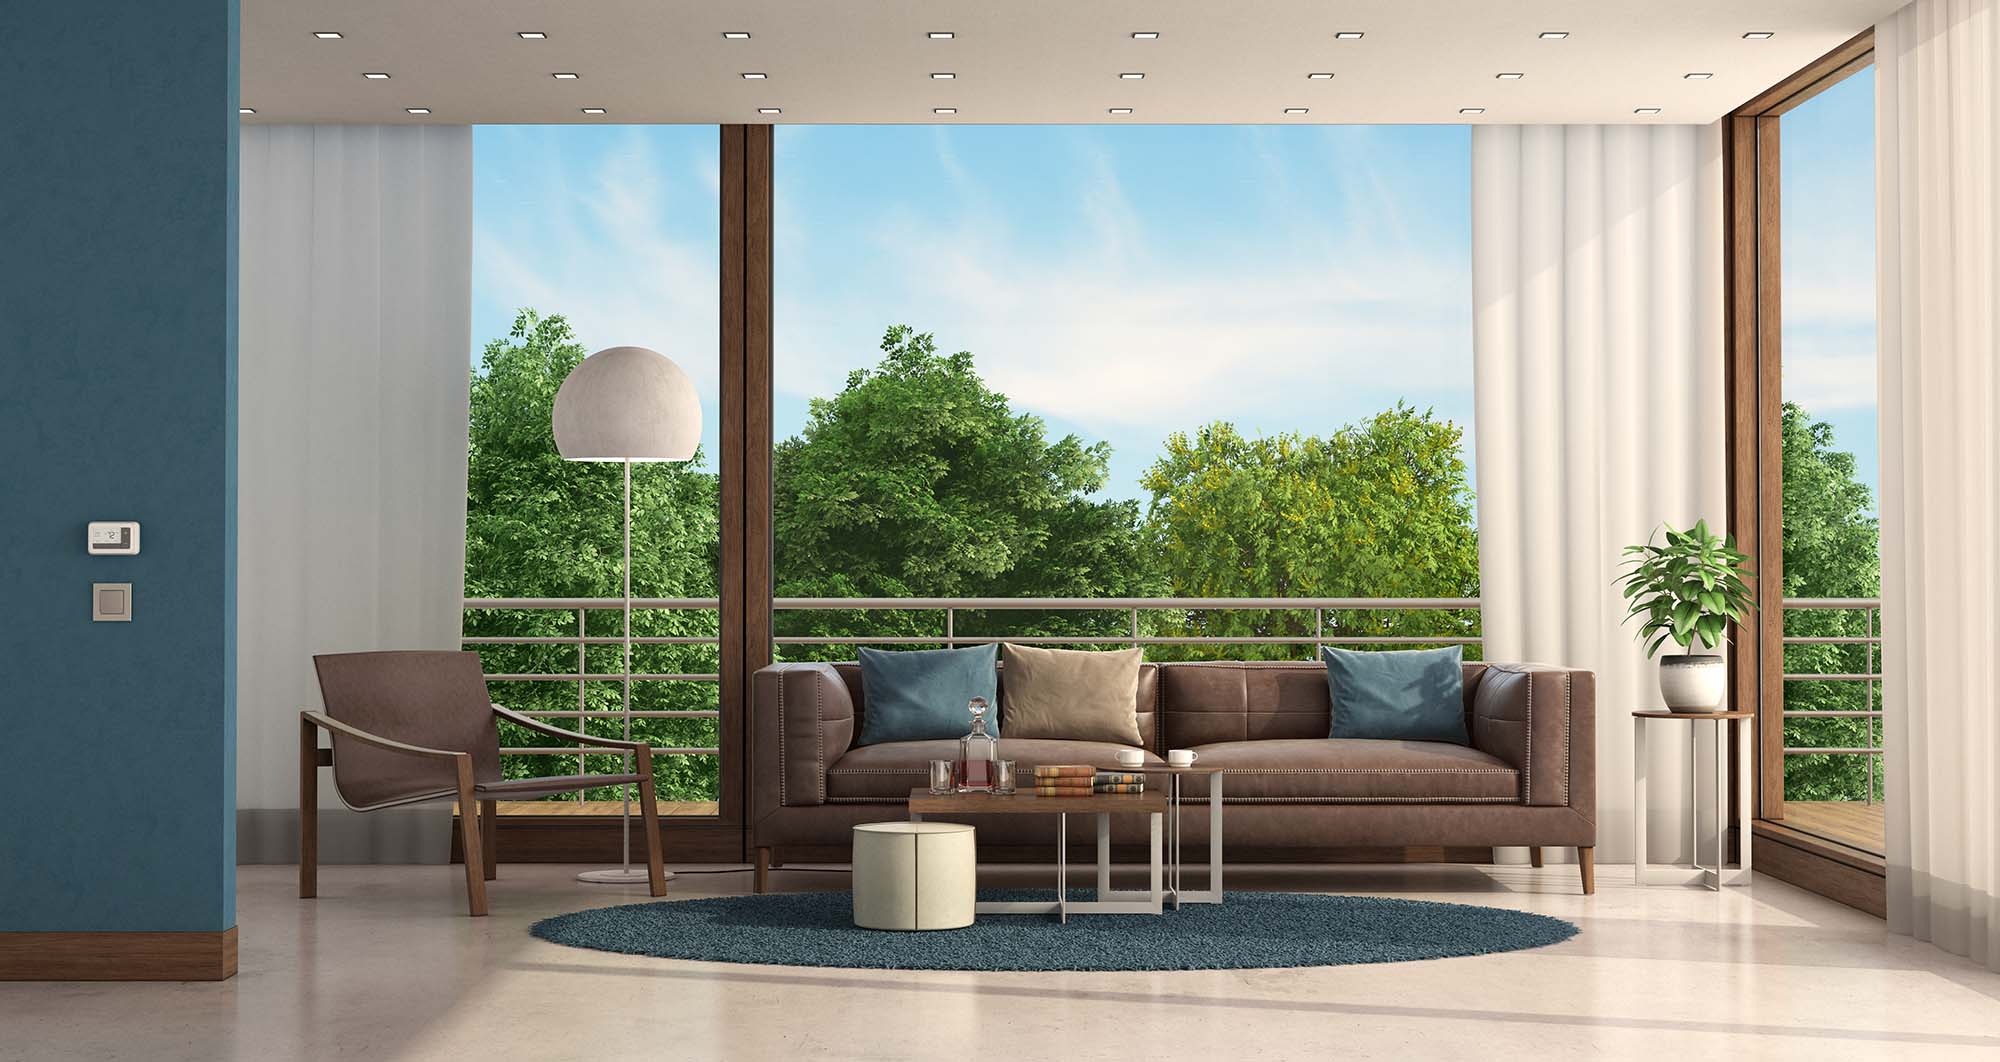 minimalist living room of a modern villa with leat 2021 08 27 09 35 13 utc